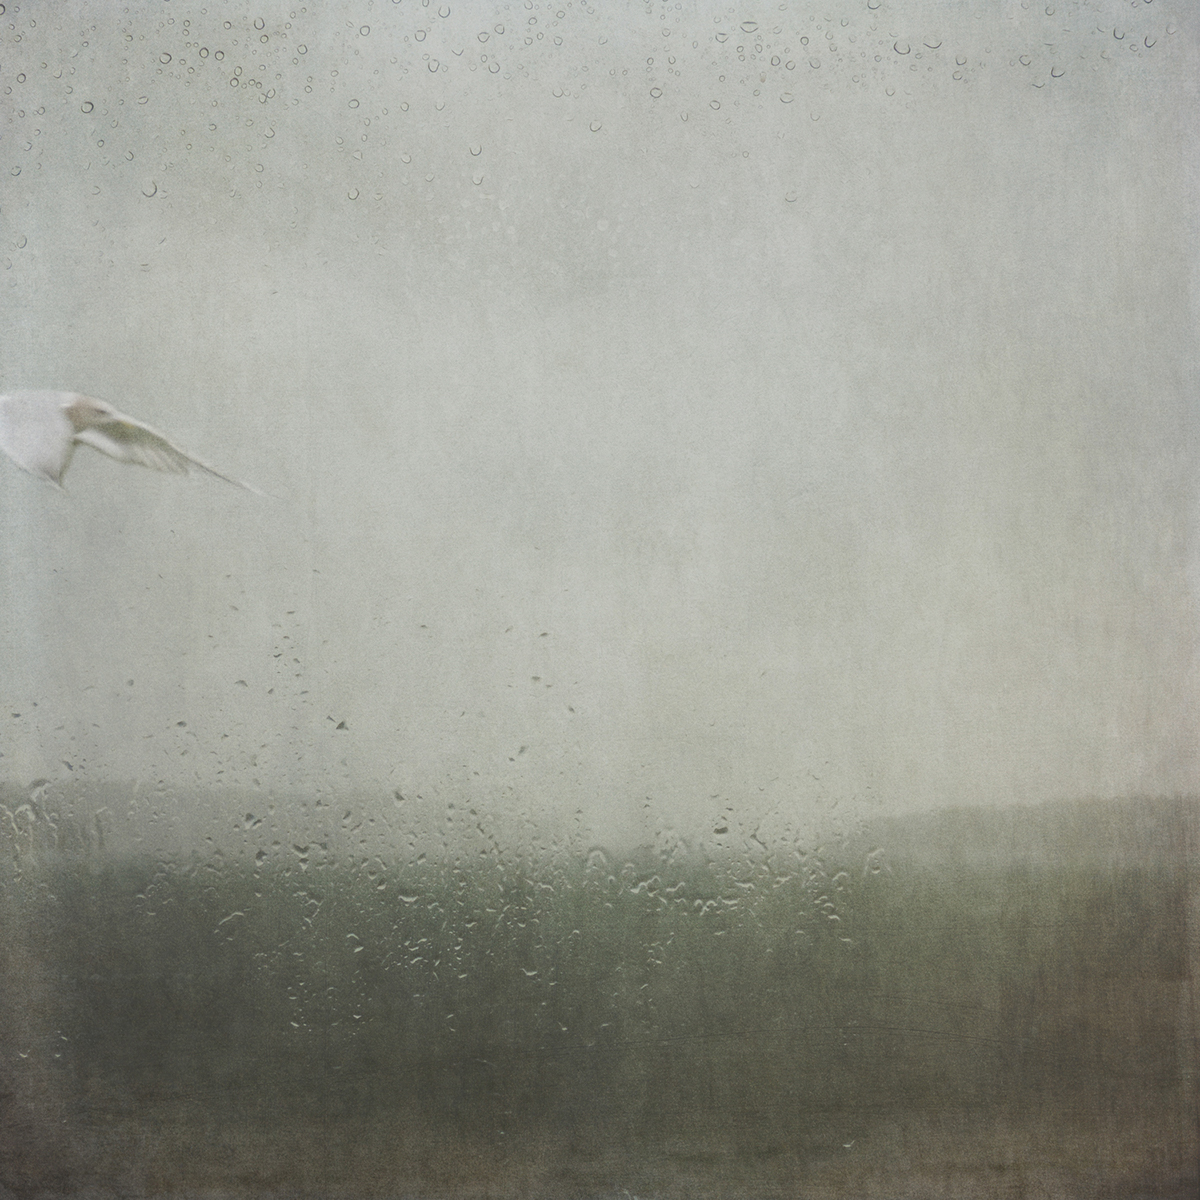 stormy rain rain on window seagulls seascape ferry Puget Sound Sally Banfill